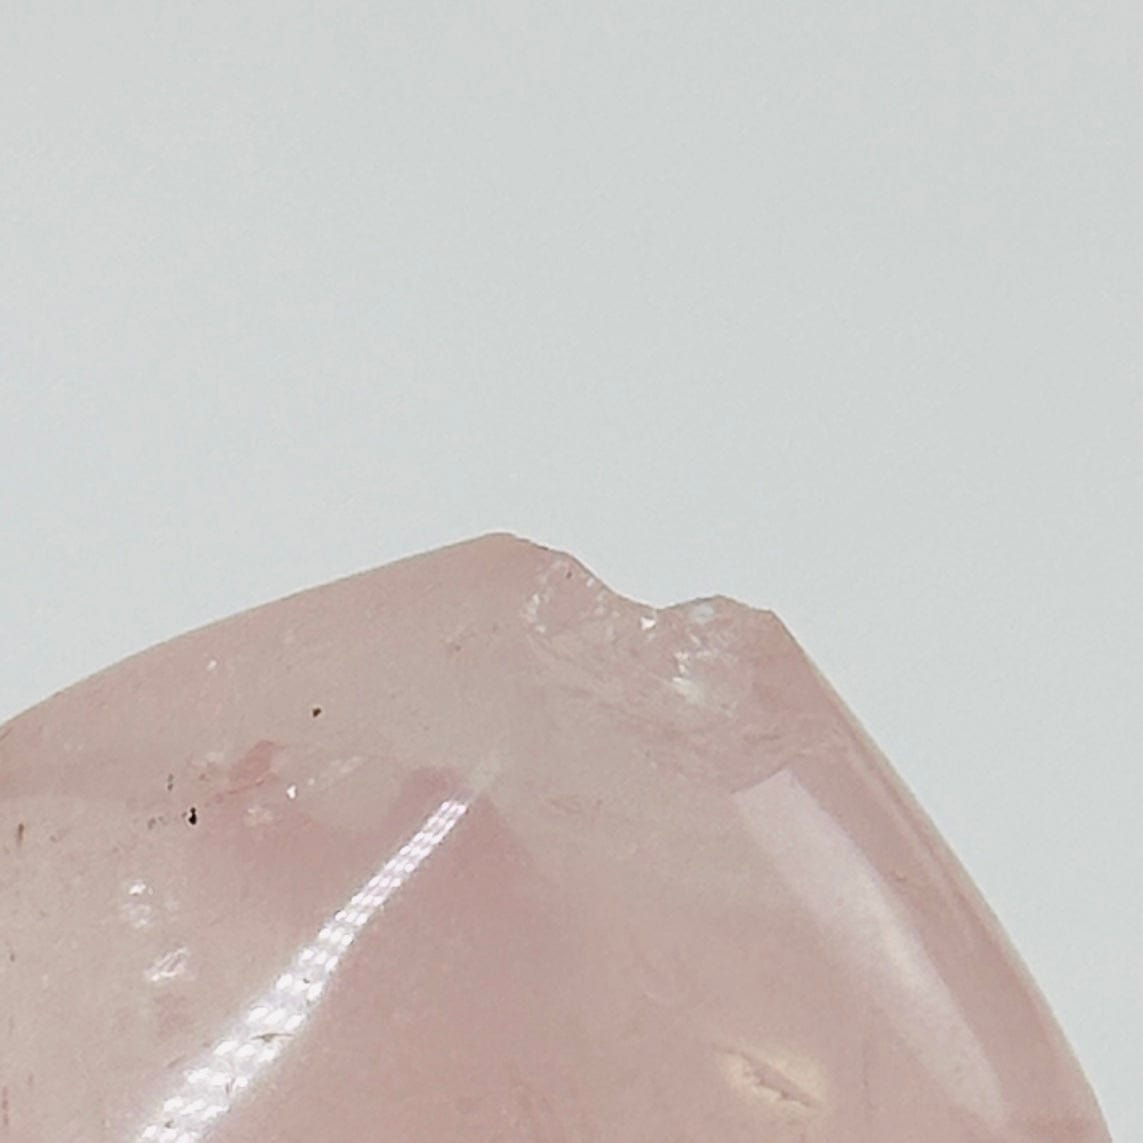 up close shot fo chip on rose quartz